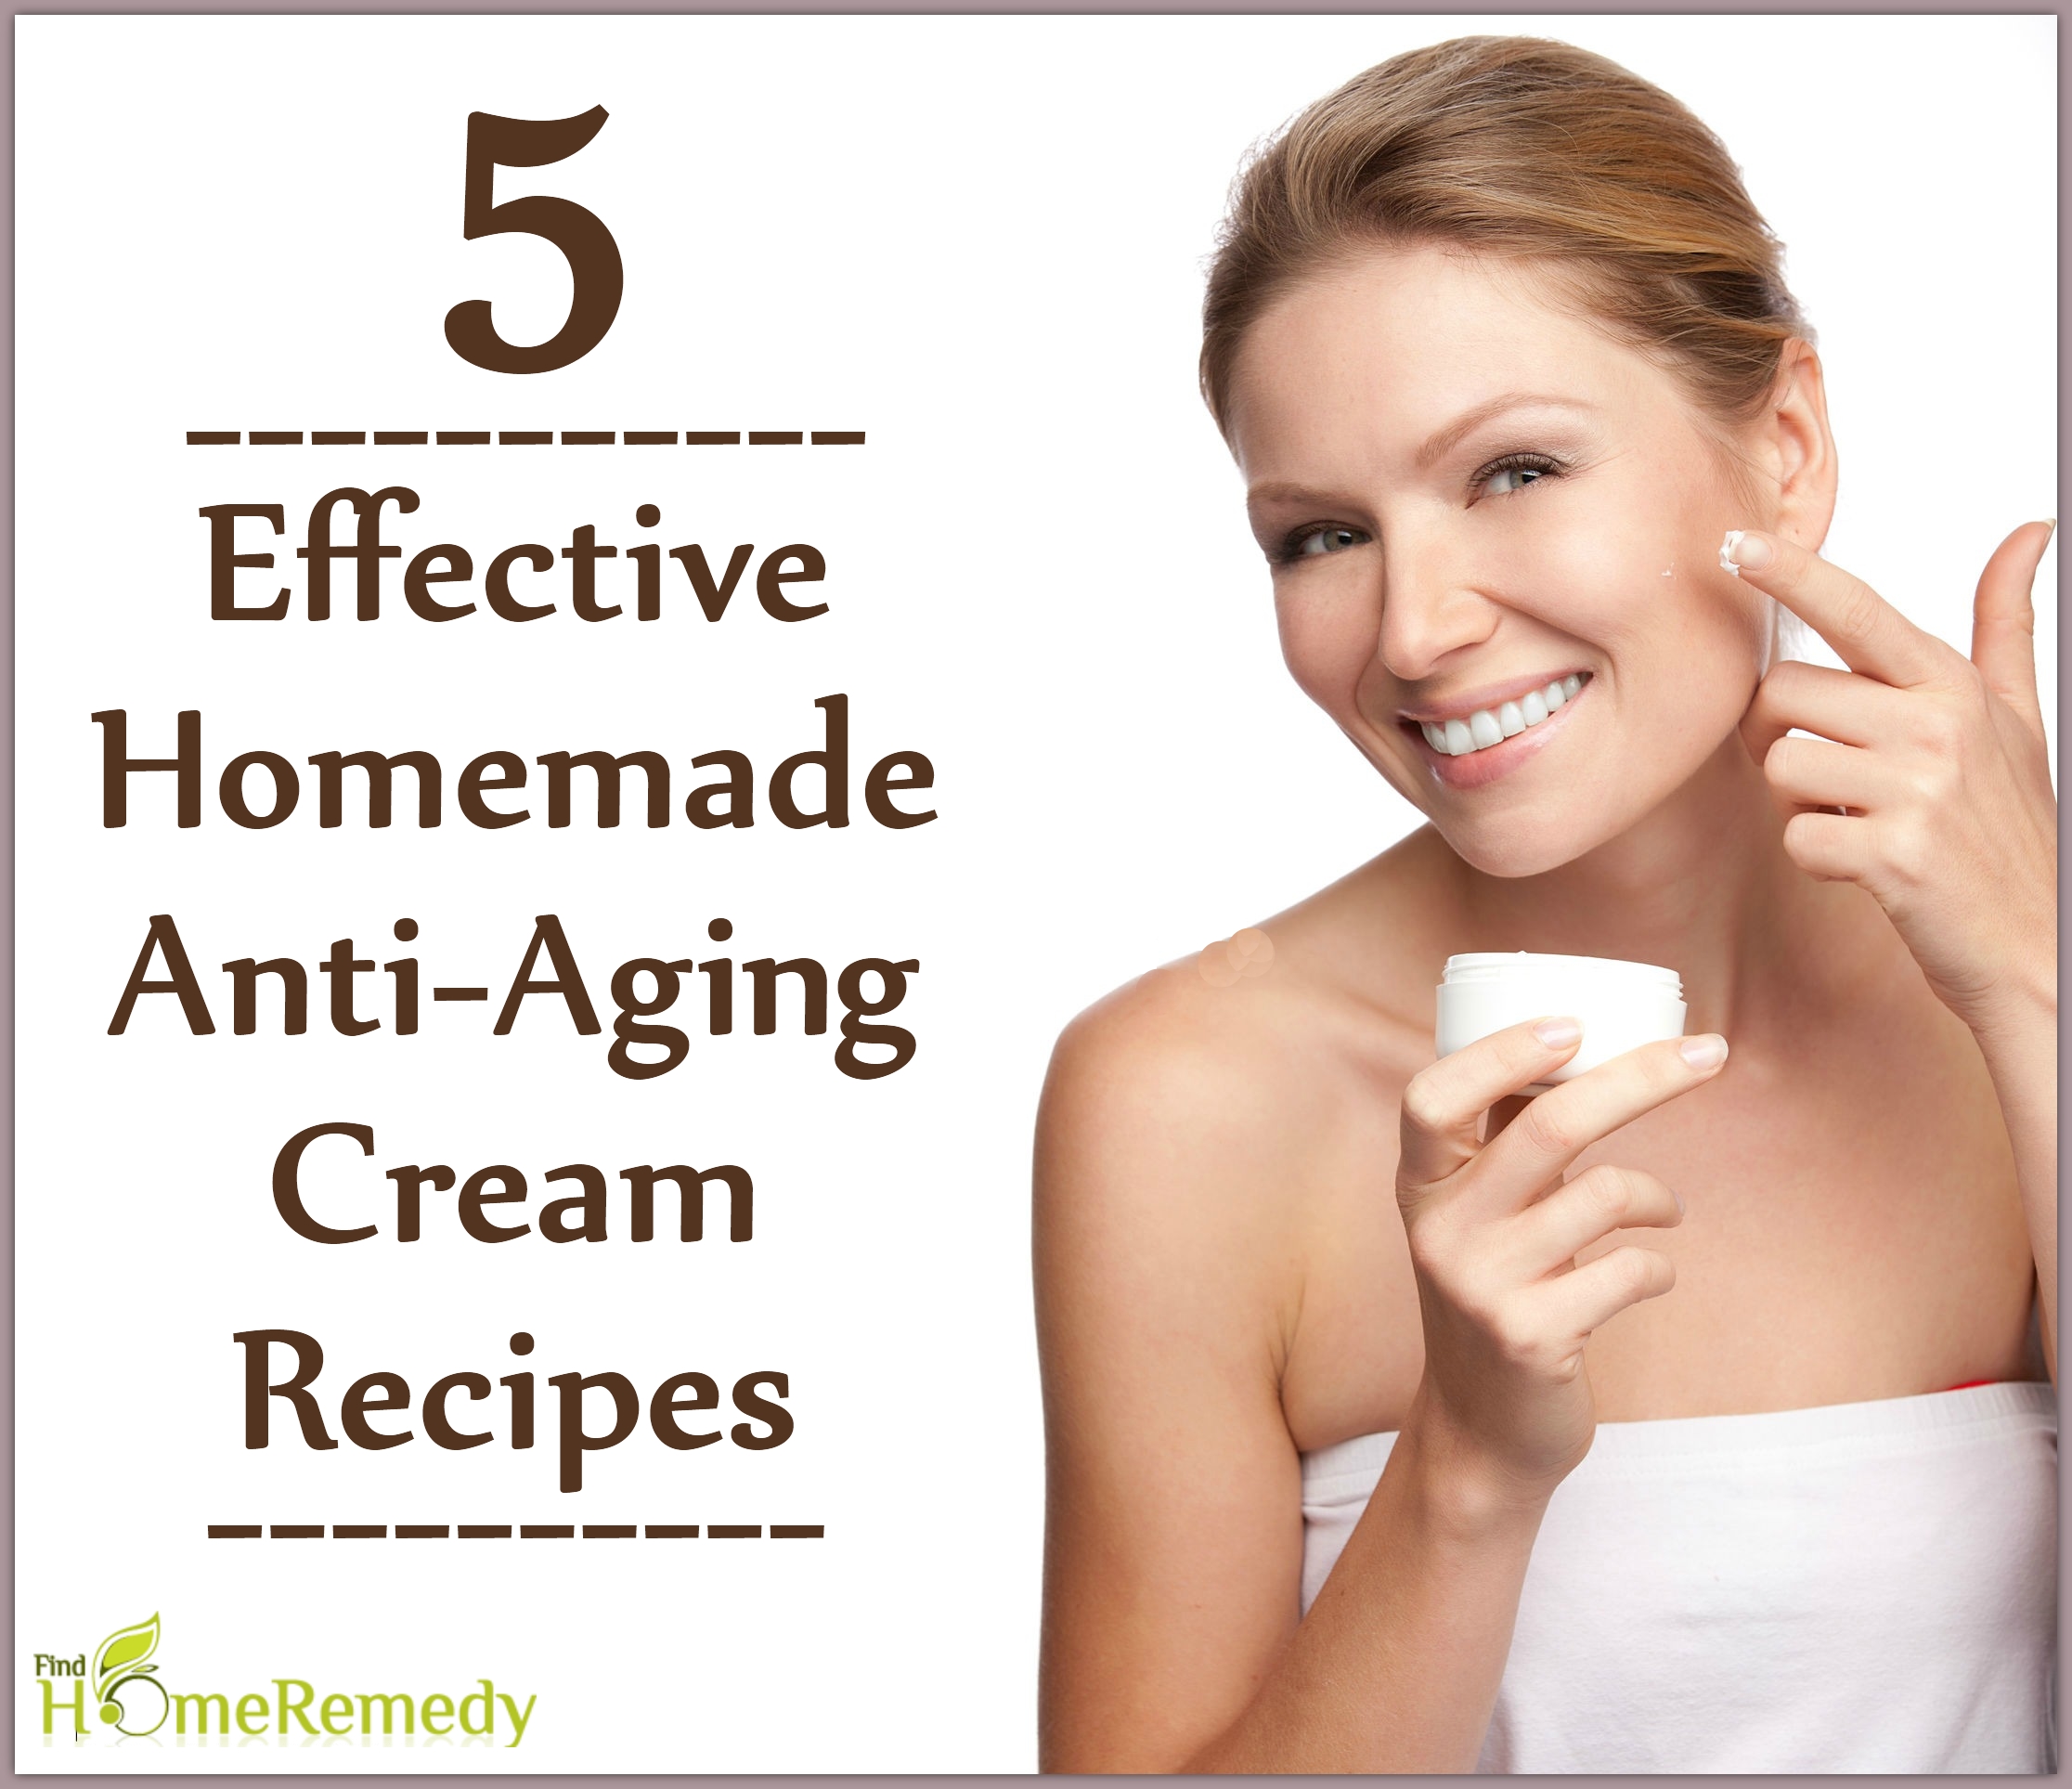 5 Effective Homemade Anti-Aging Cream Recipes